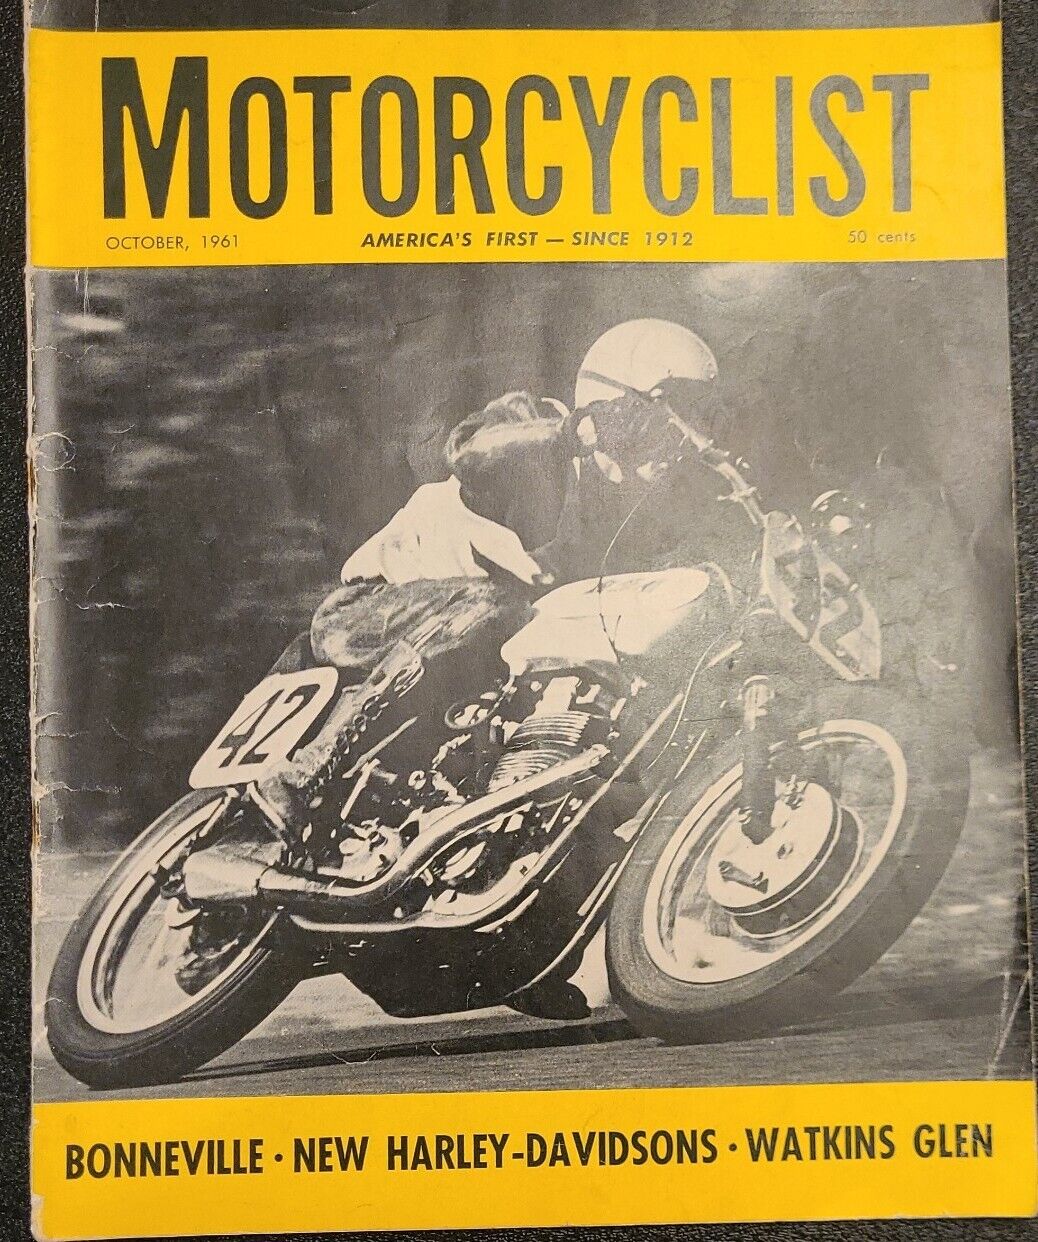 MOTORCYCLIST MOTORCYCLE MAGAZINE, OCTOBER 1961 CARROLL RESWEBER HARLEY-DAVIDSON